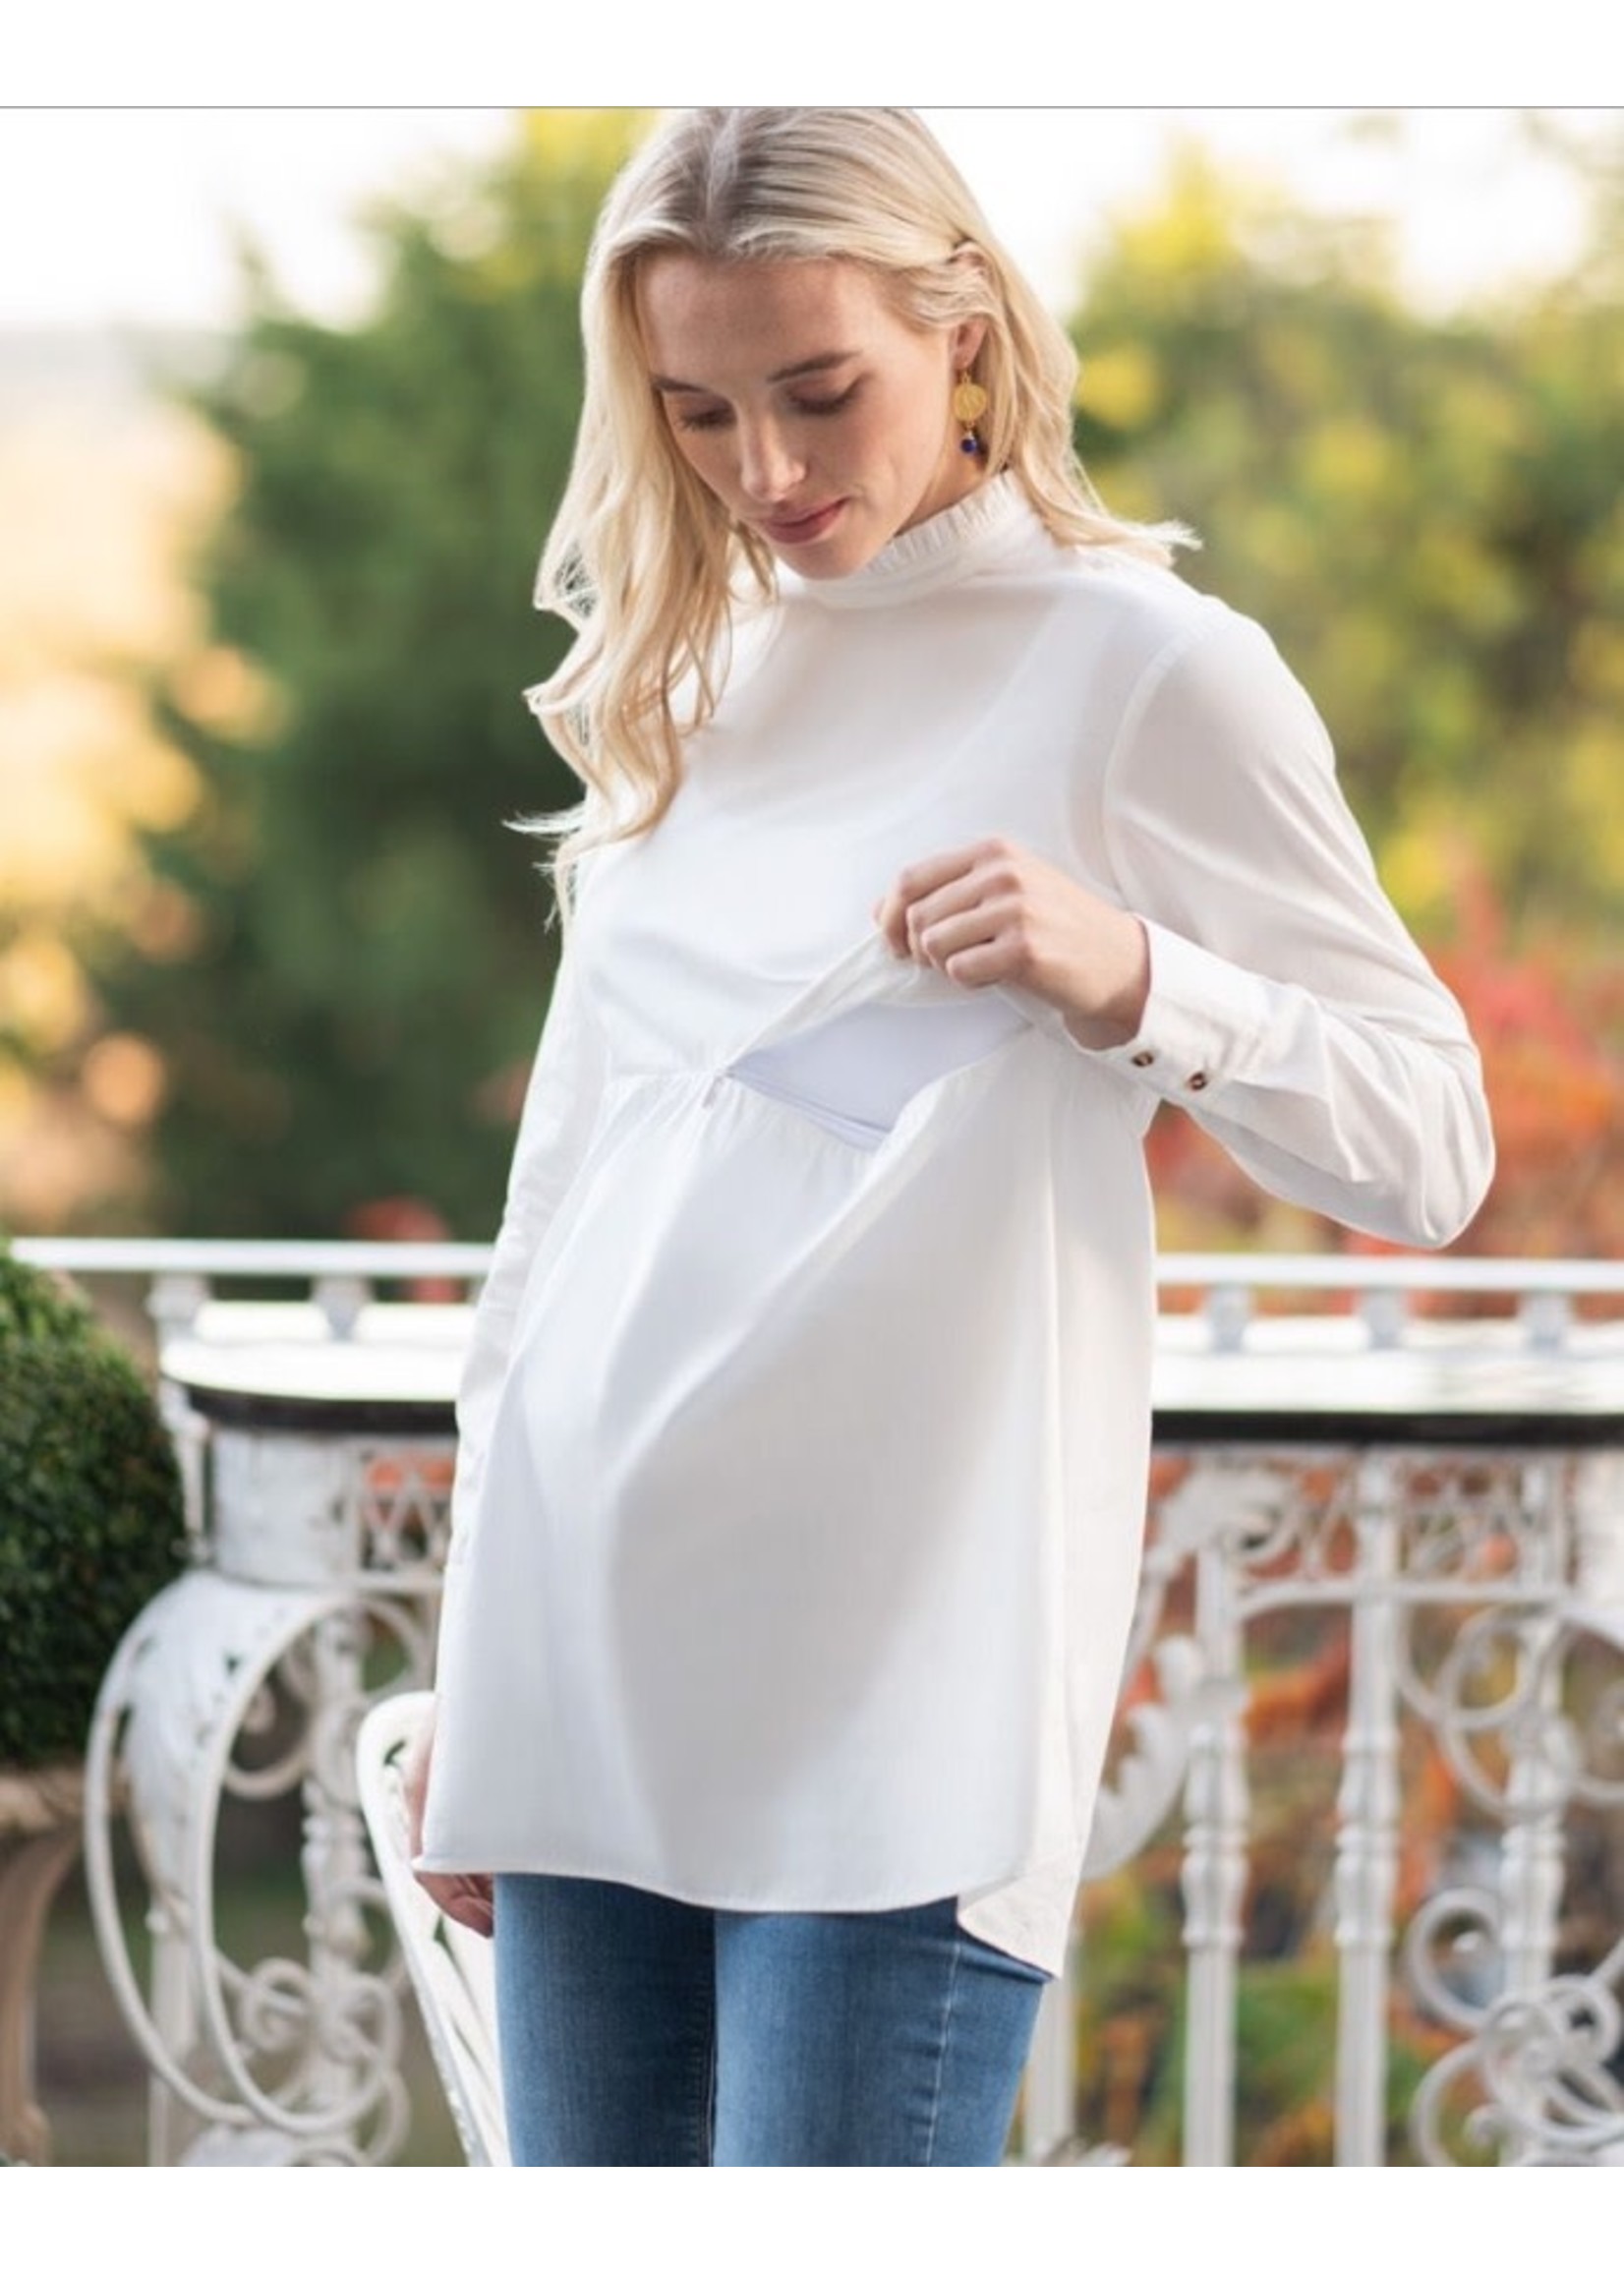 Seraphine, Sigourney 2 in 1 Maternity & Nursing Shirt Set in Black and  White - Steveston Village Maternity